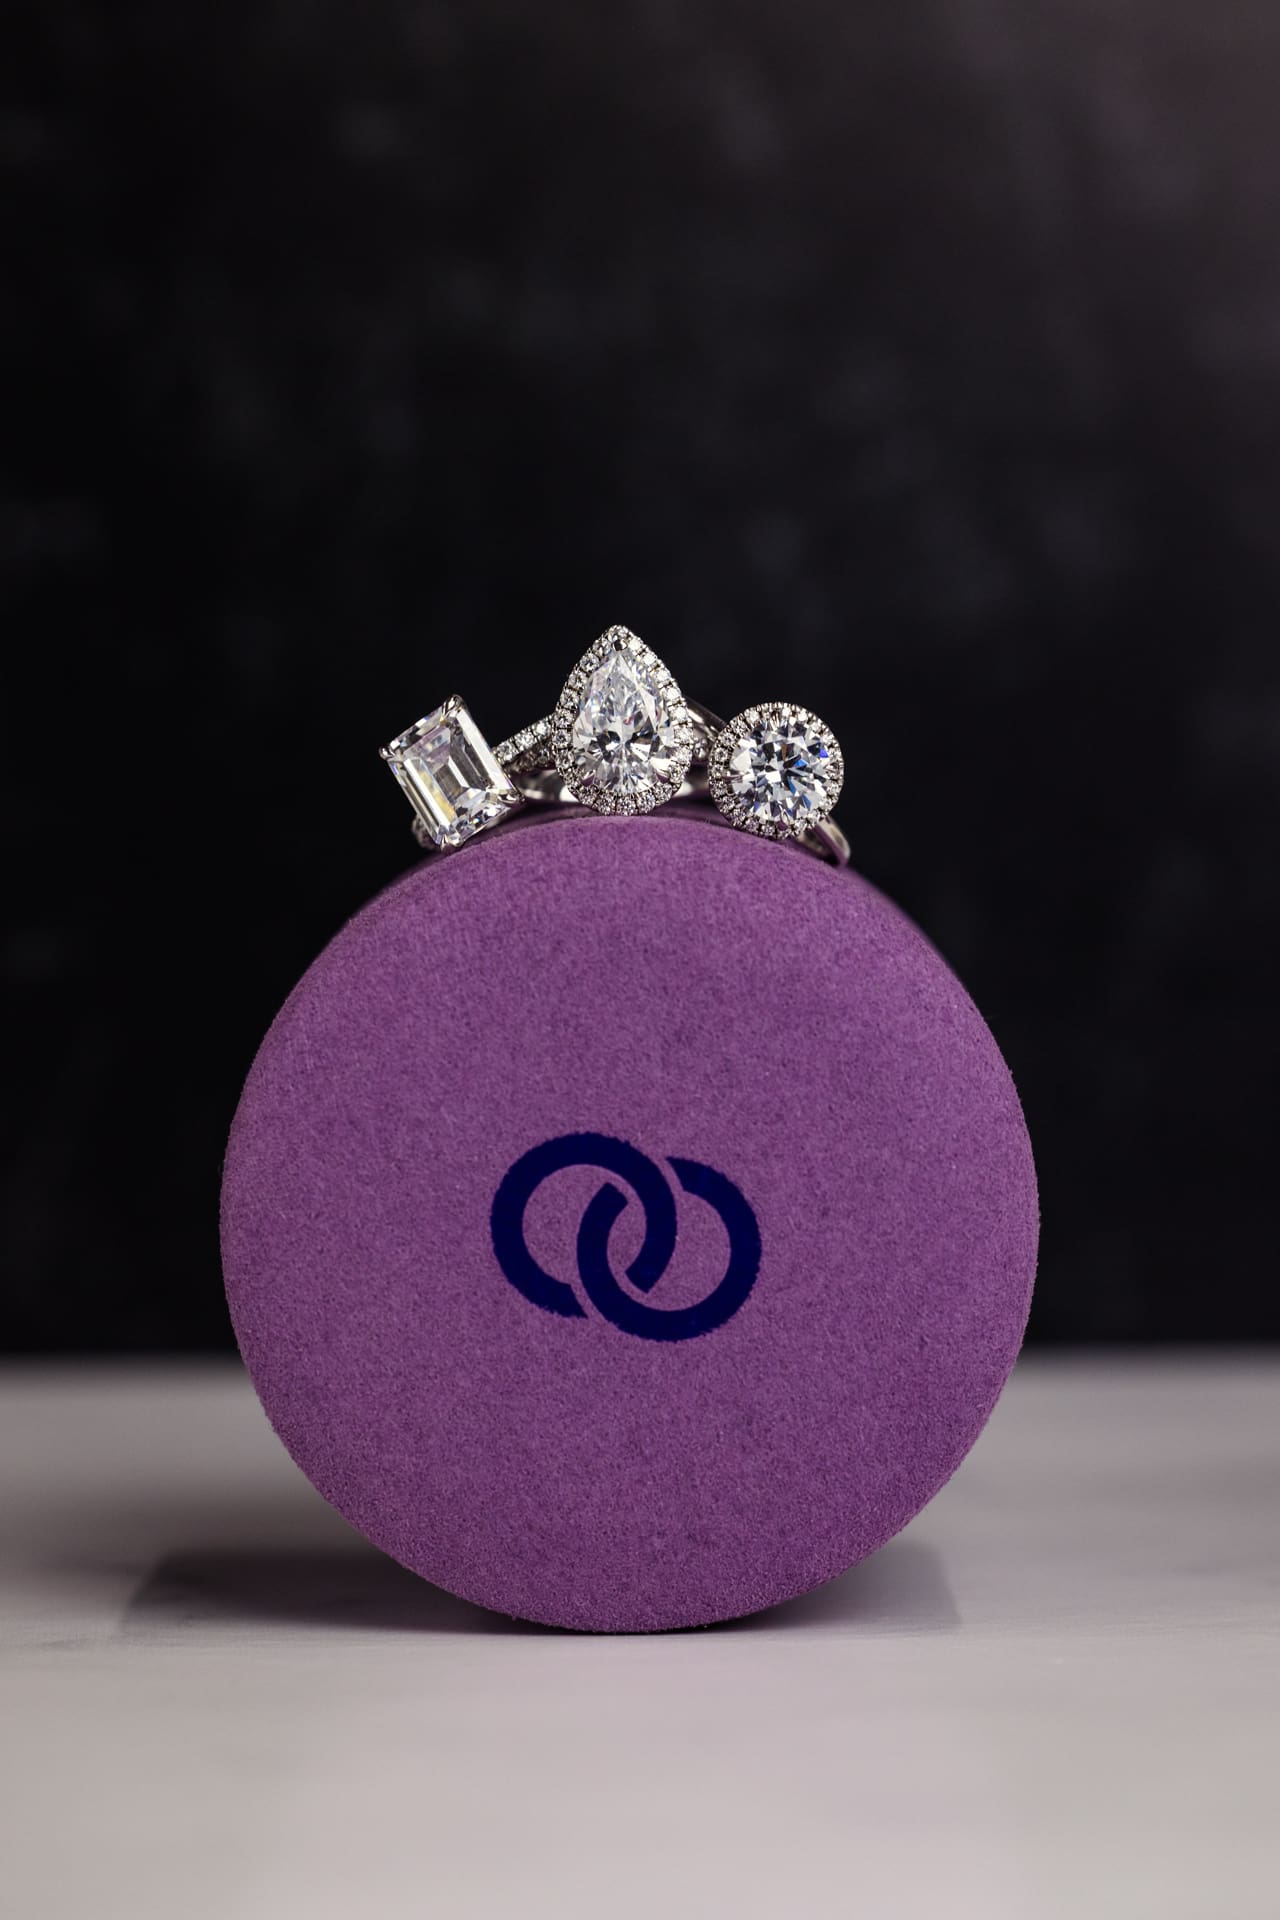 Dramatic jewelry product photo of three diamond rings sitting on purple velvet box with Plum Diamonds logo with black background at Chicago photography studio P&M Studio